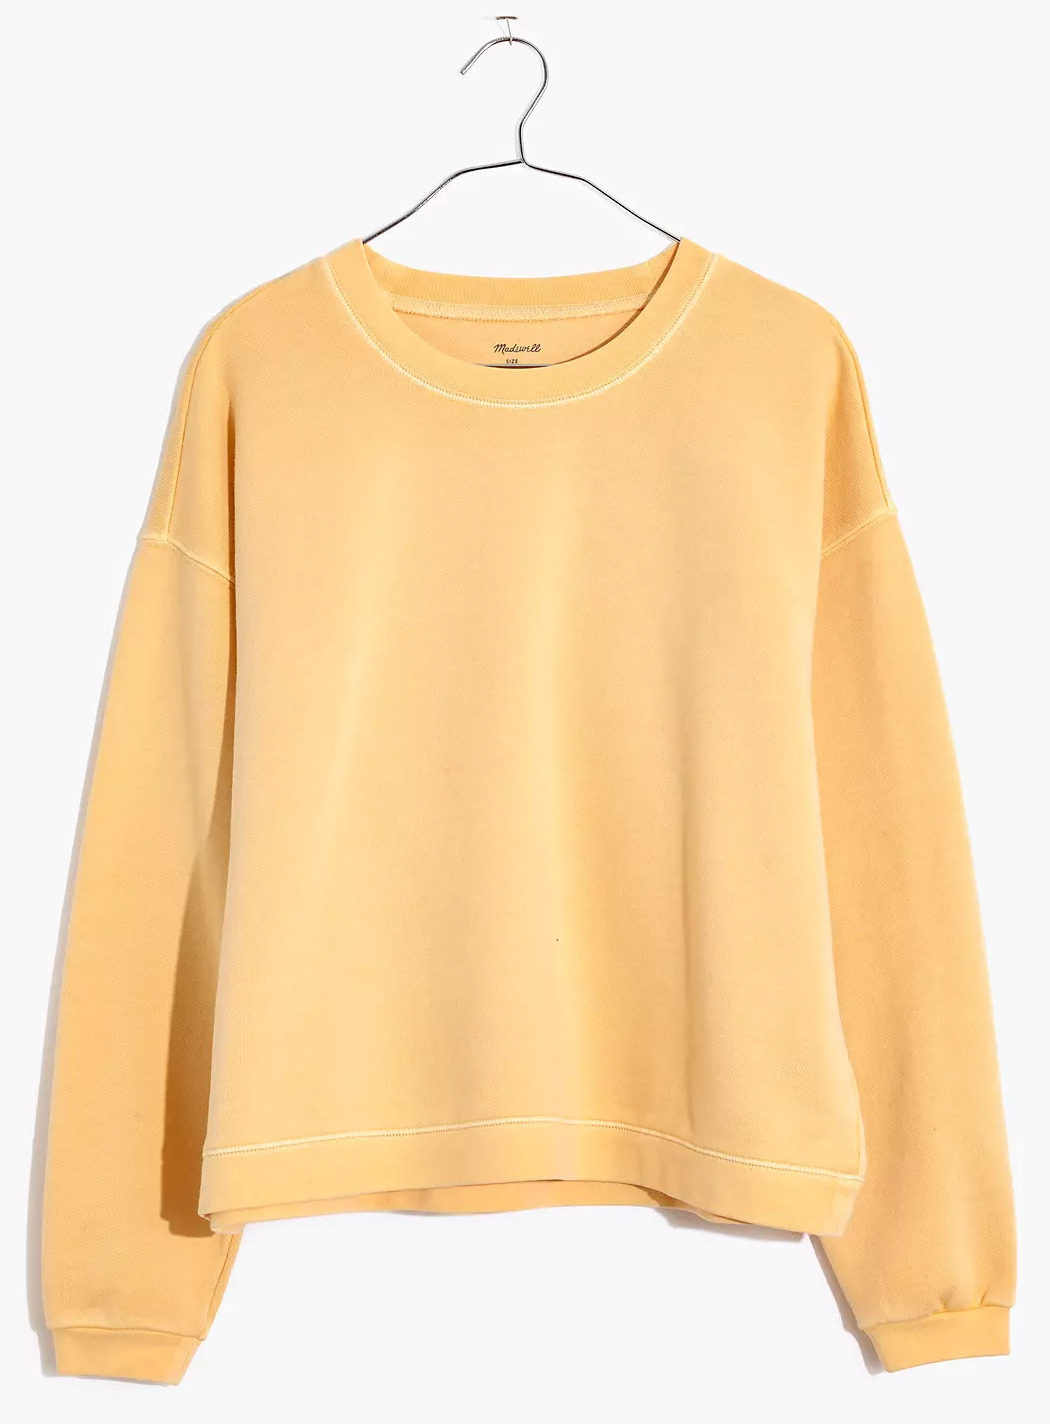 10 Lightweight Sweaters to Transition Into Spring - FabFitFun